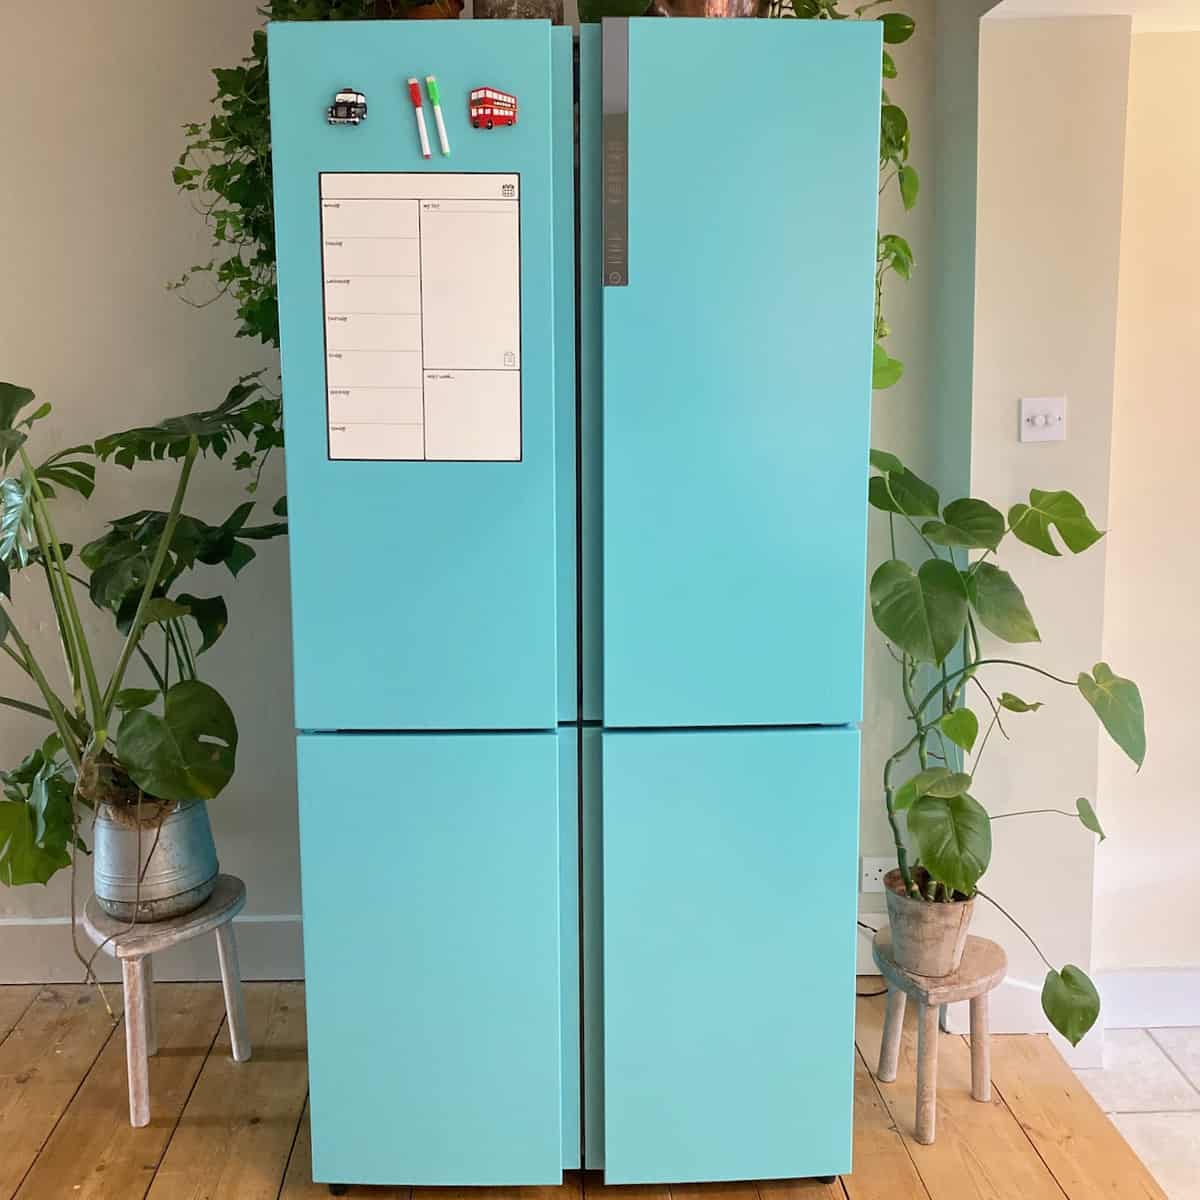 Multi-door fridge freezer freshly painted in turquoise with plants around it